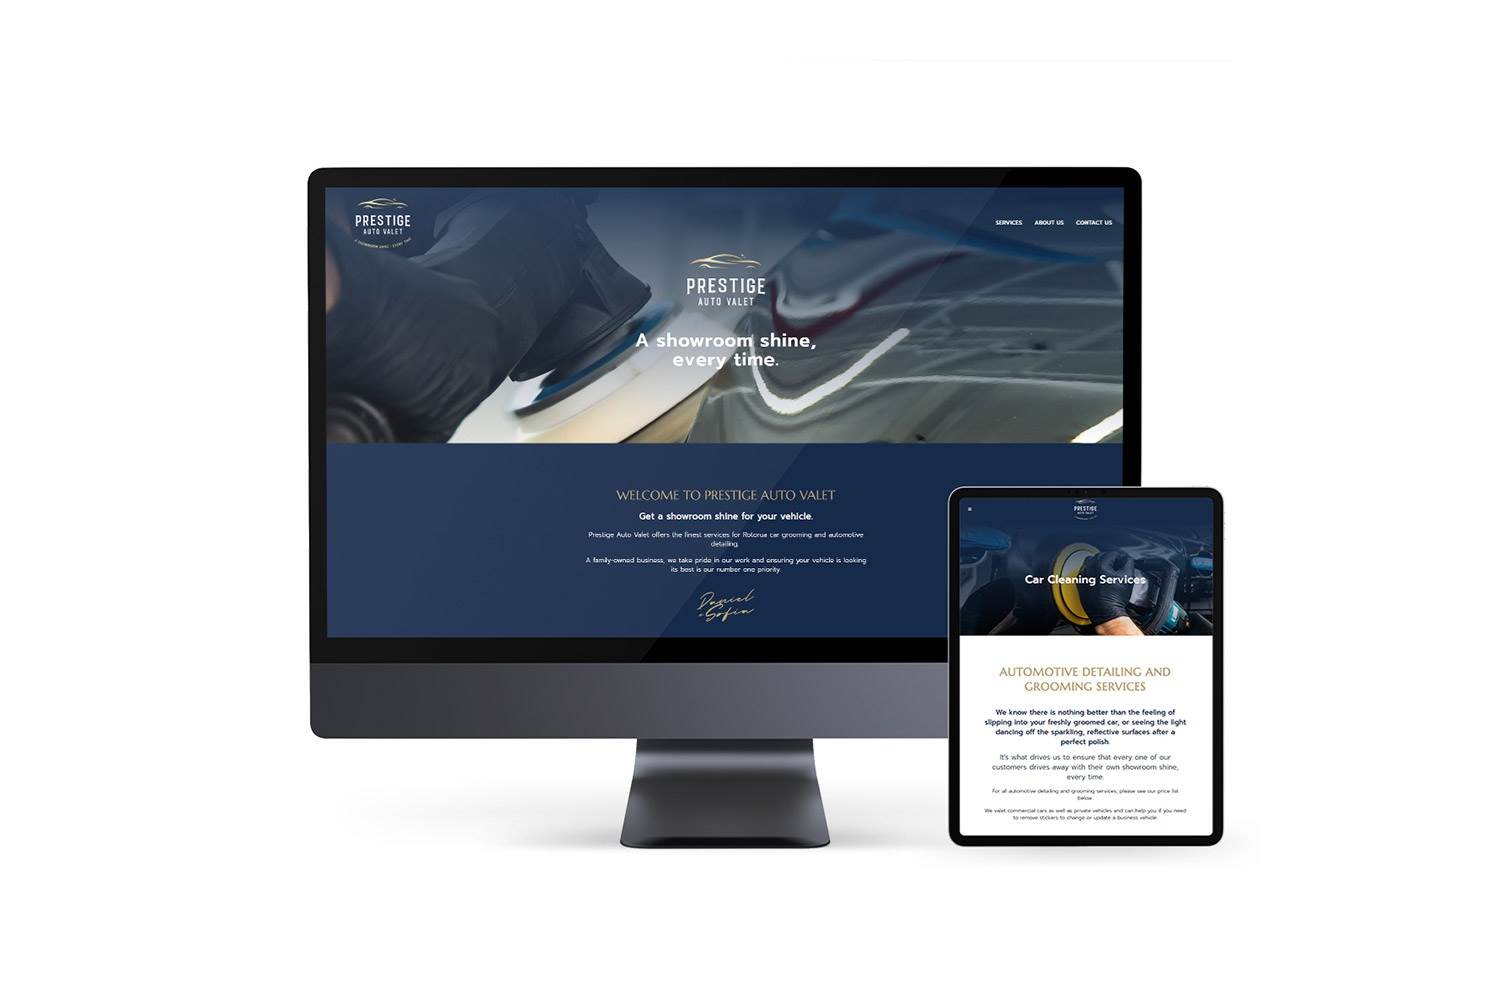 Prestige Auto Valet - Rotorua website design